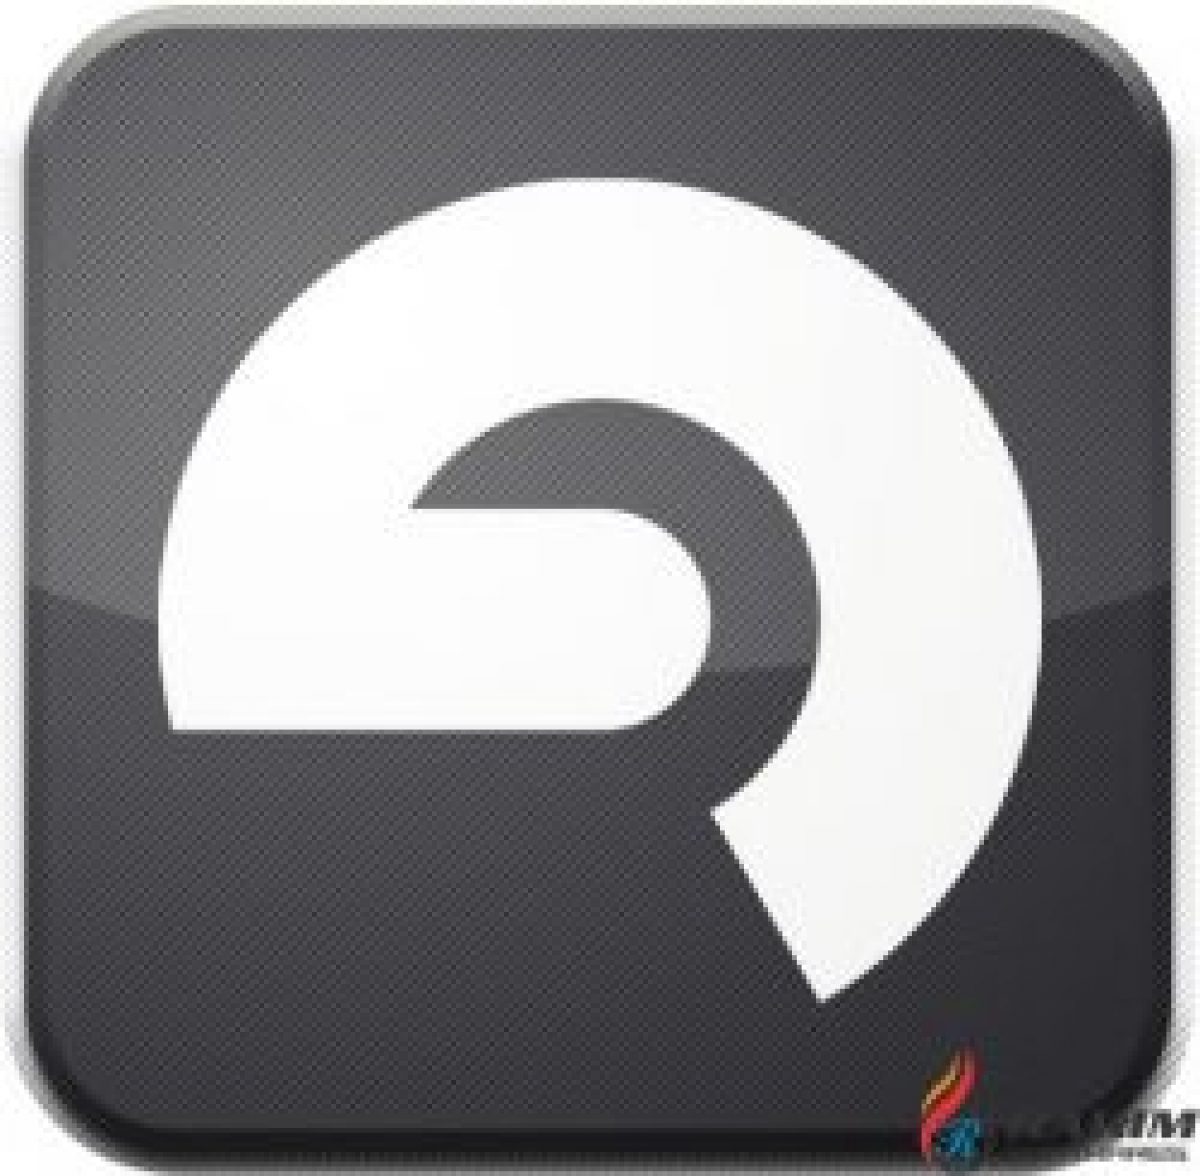 Ableton Live 9 Suite Free Download Pc